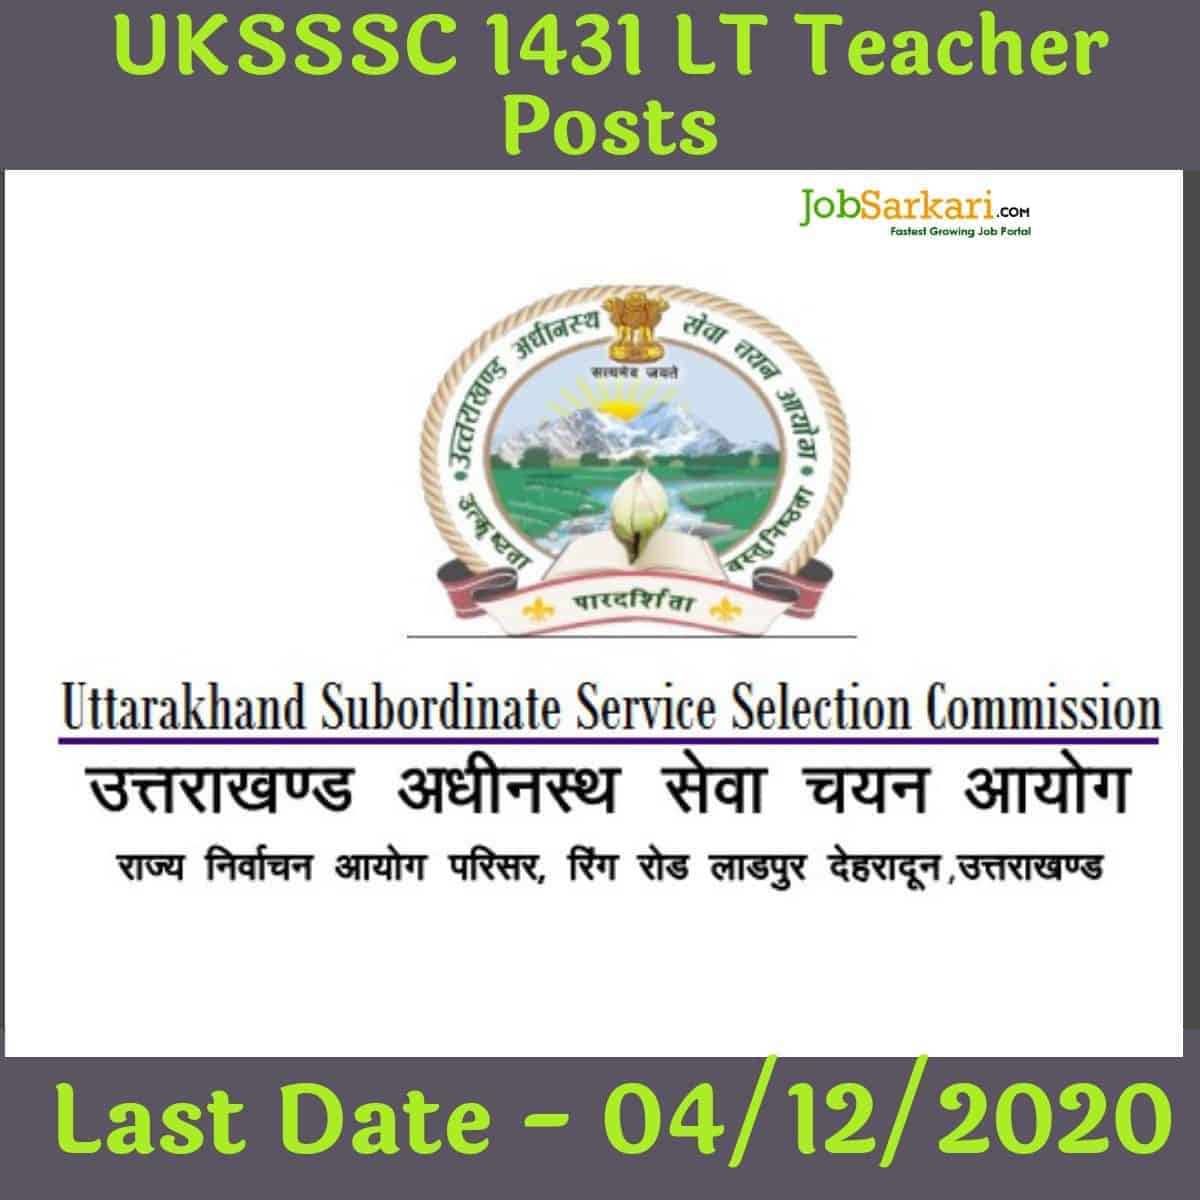 UKSSSC 1431 LT Teacher Posts